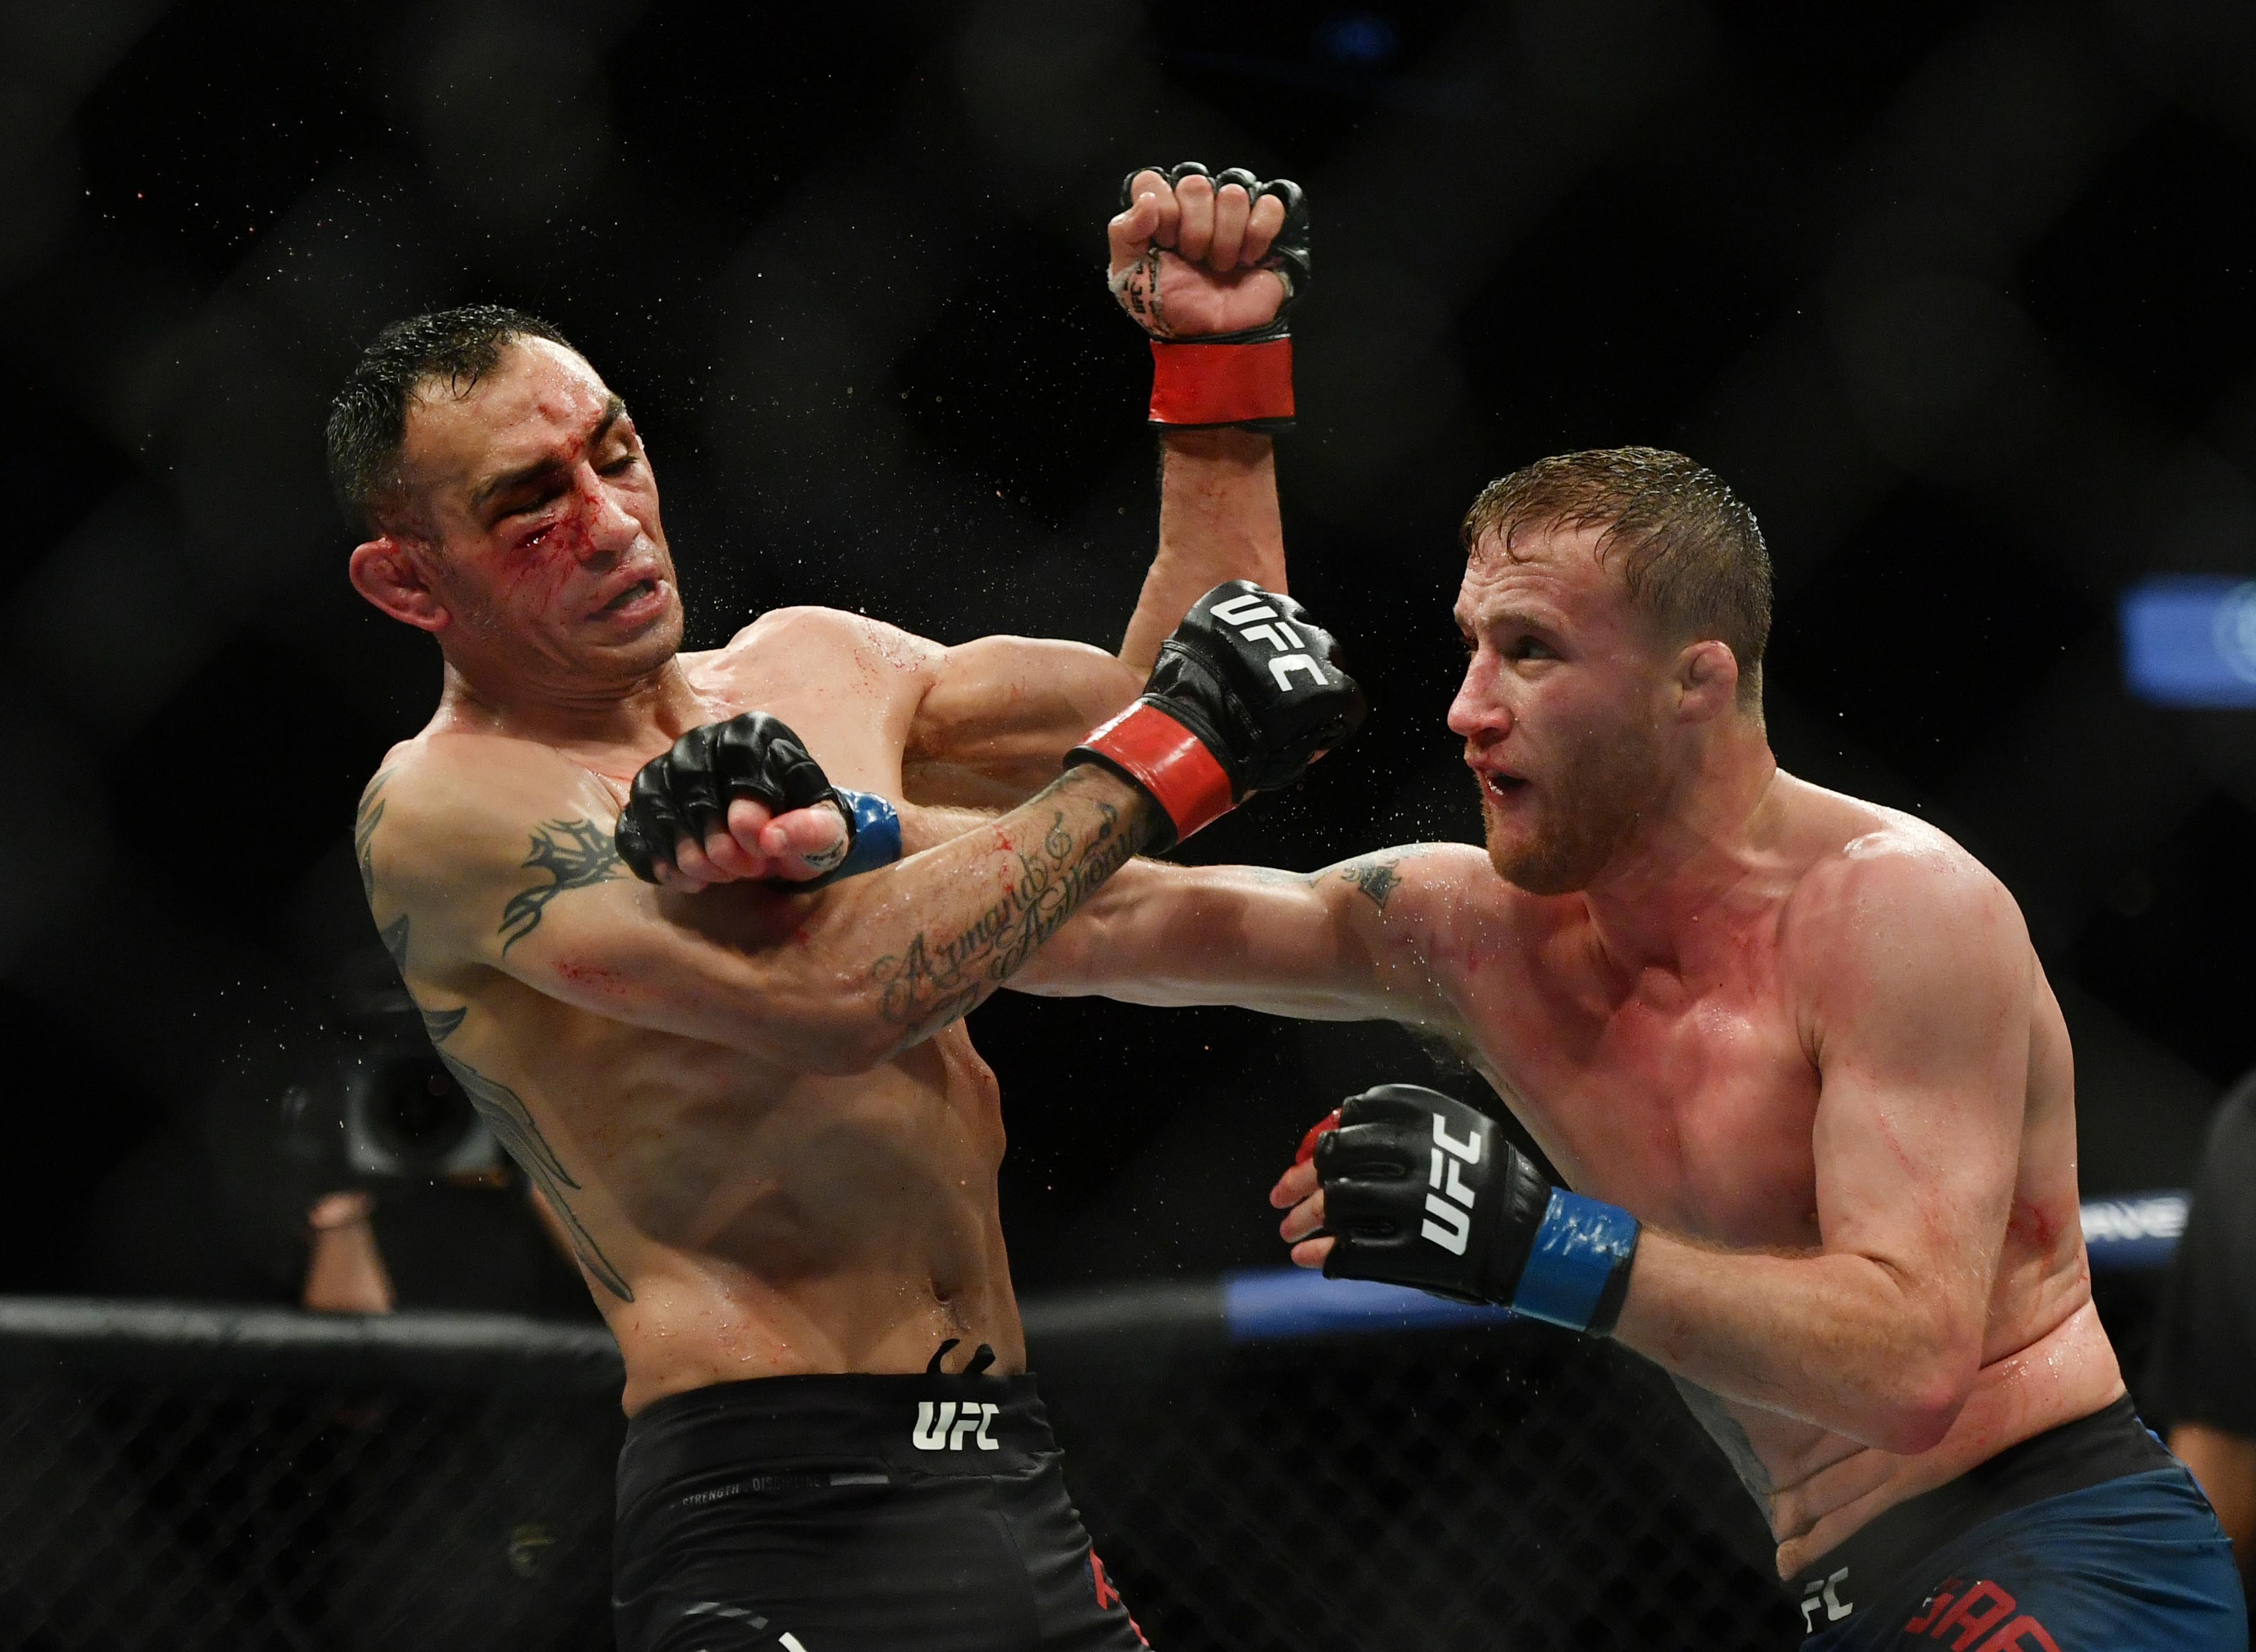 video review : Tony Ferguson versus Justin Gaethje at UFC 249